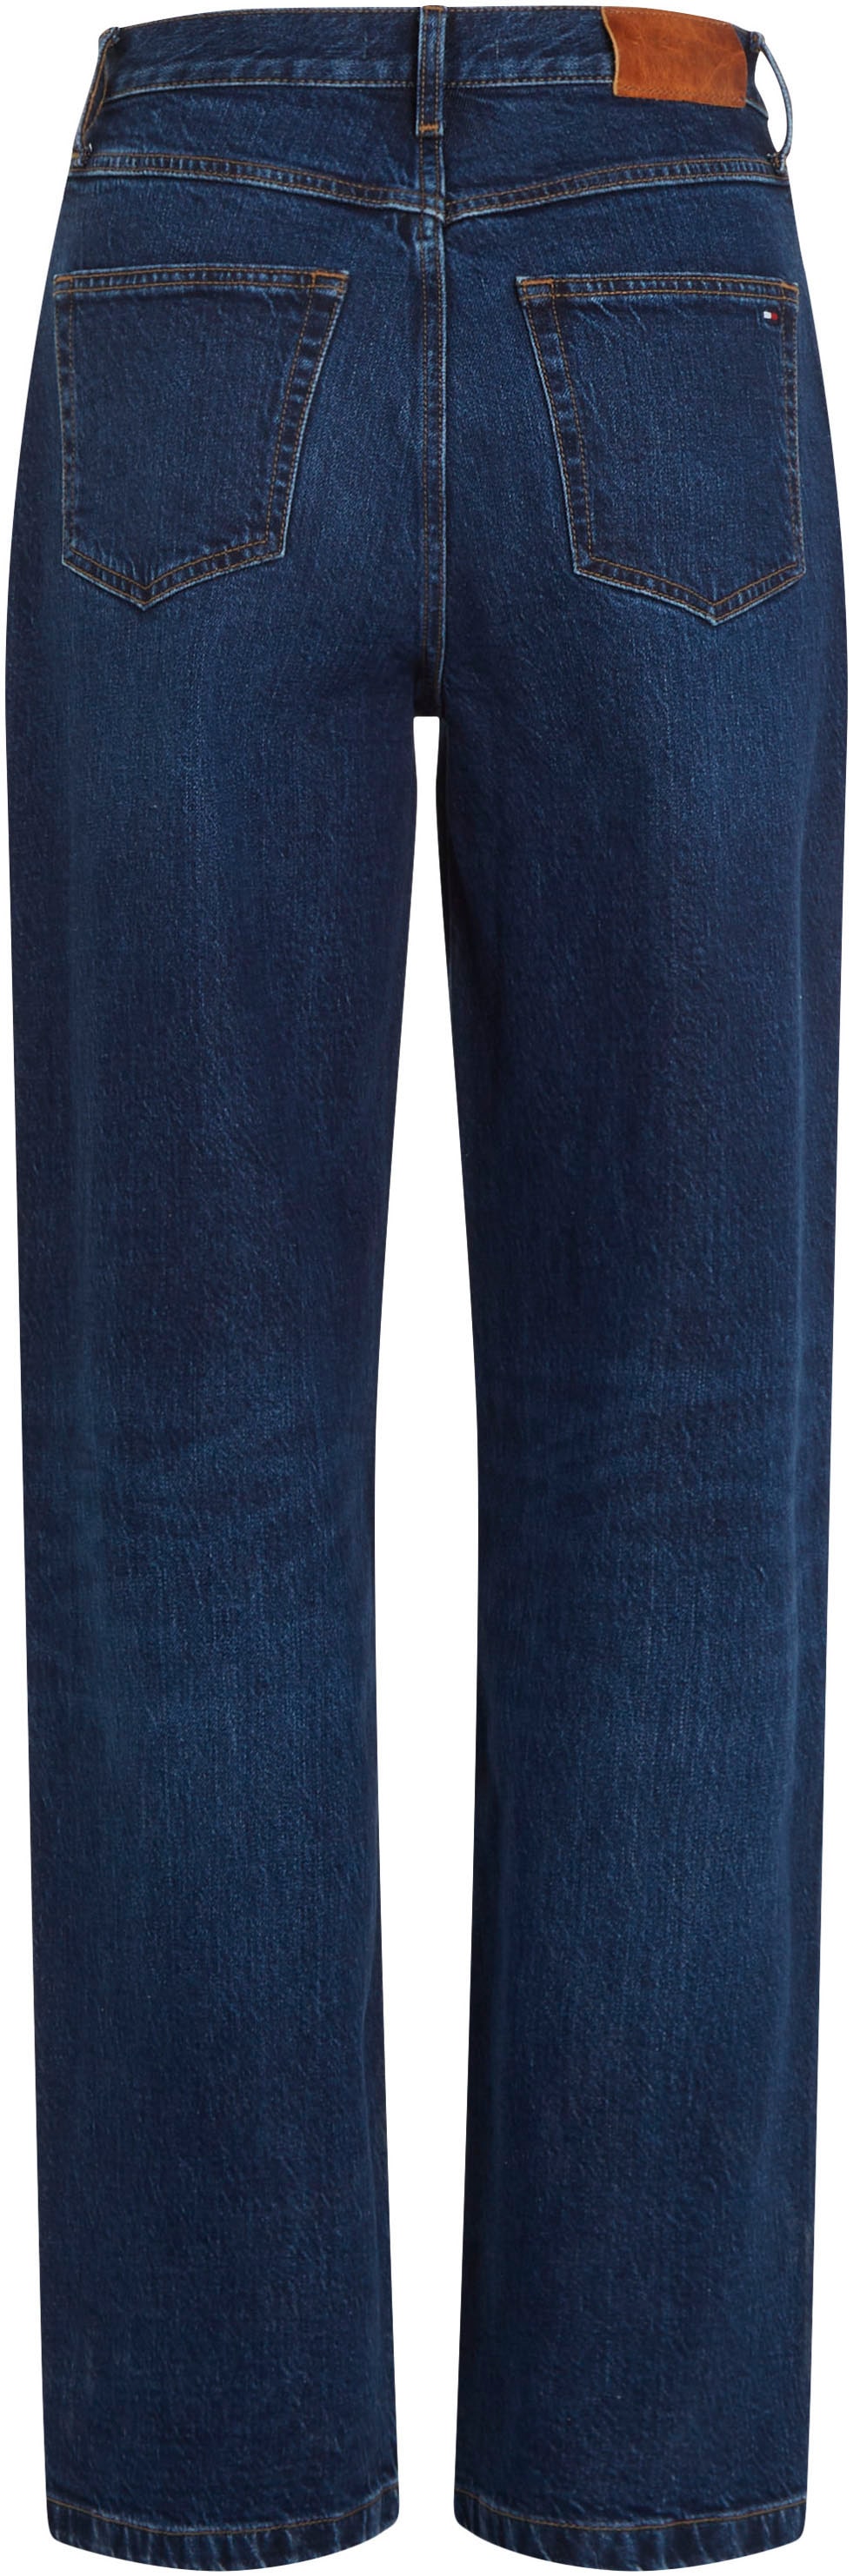 bei HW online in Waschung PAM«, weisser Jelmoli-Versand Relax-fit-Jeans Tommy »RELAXED Hilfiger shoppen STRAIGHT Schweiz